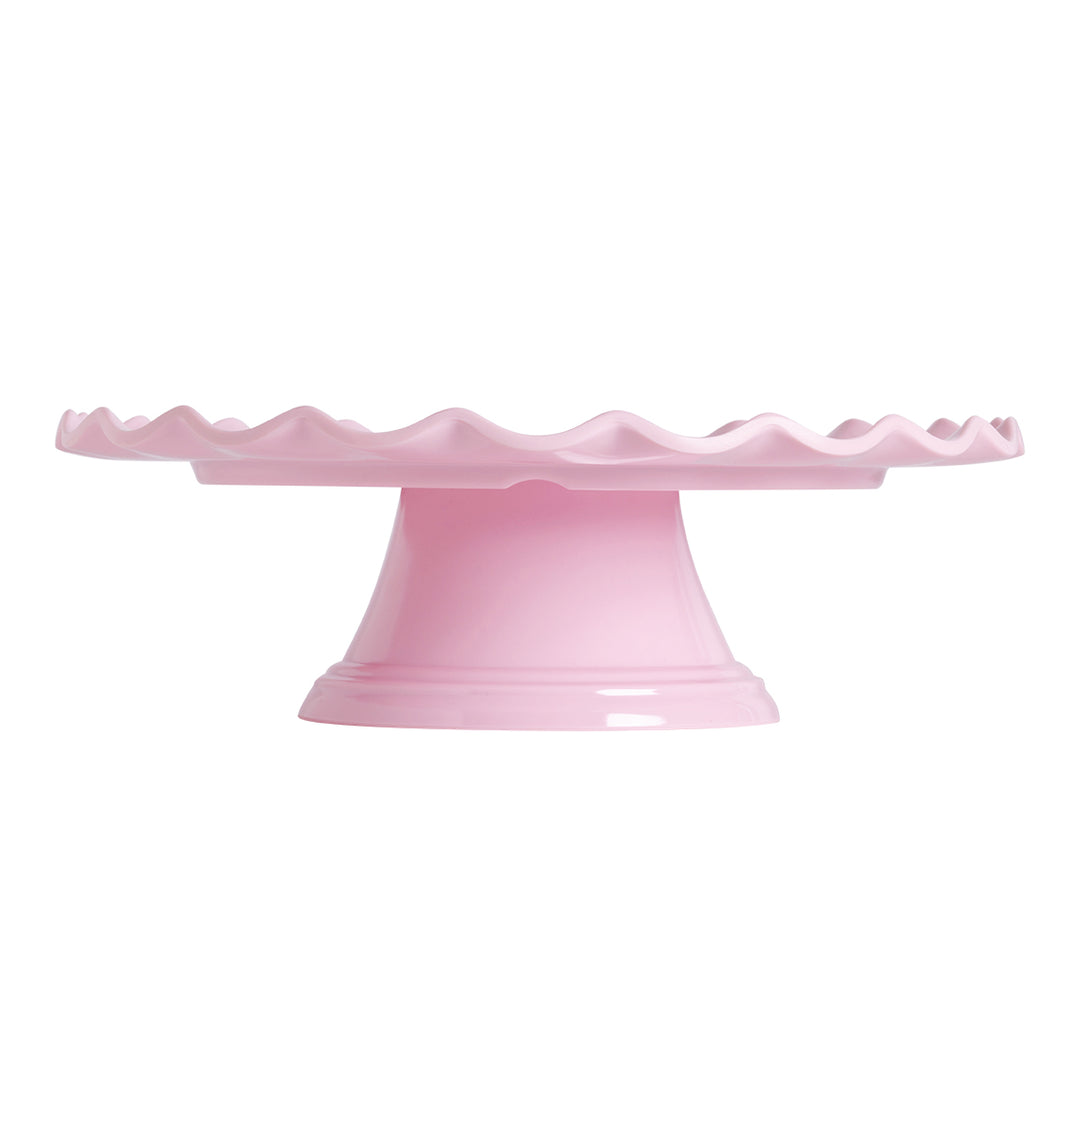 Wave Rim Pink Cake Stand